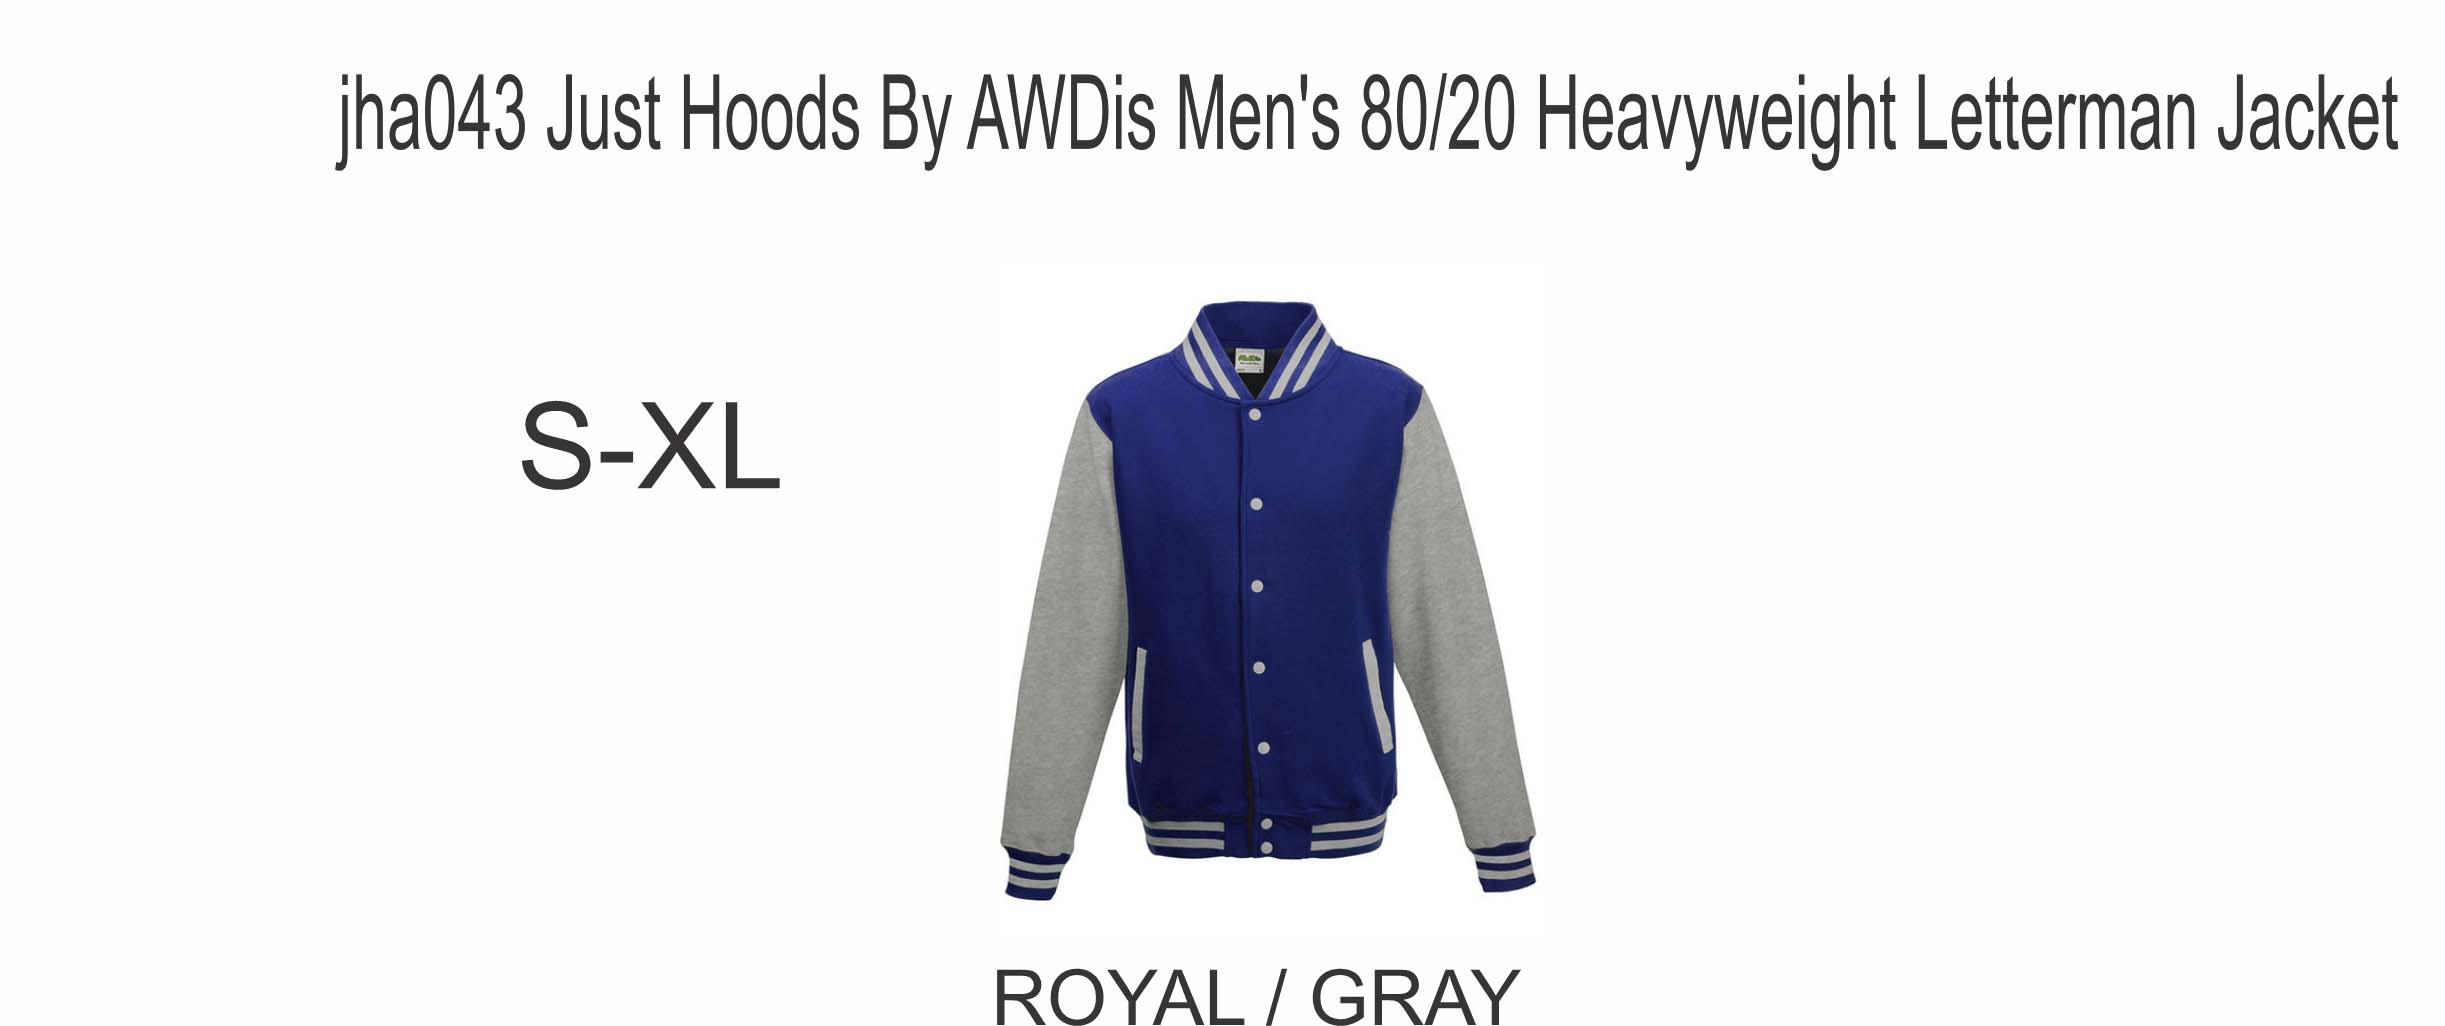 Just Hoods By AWDis Men's 80/20 Heavyweight Letterman Jacket